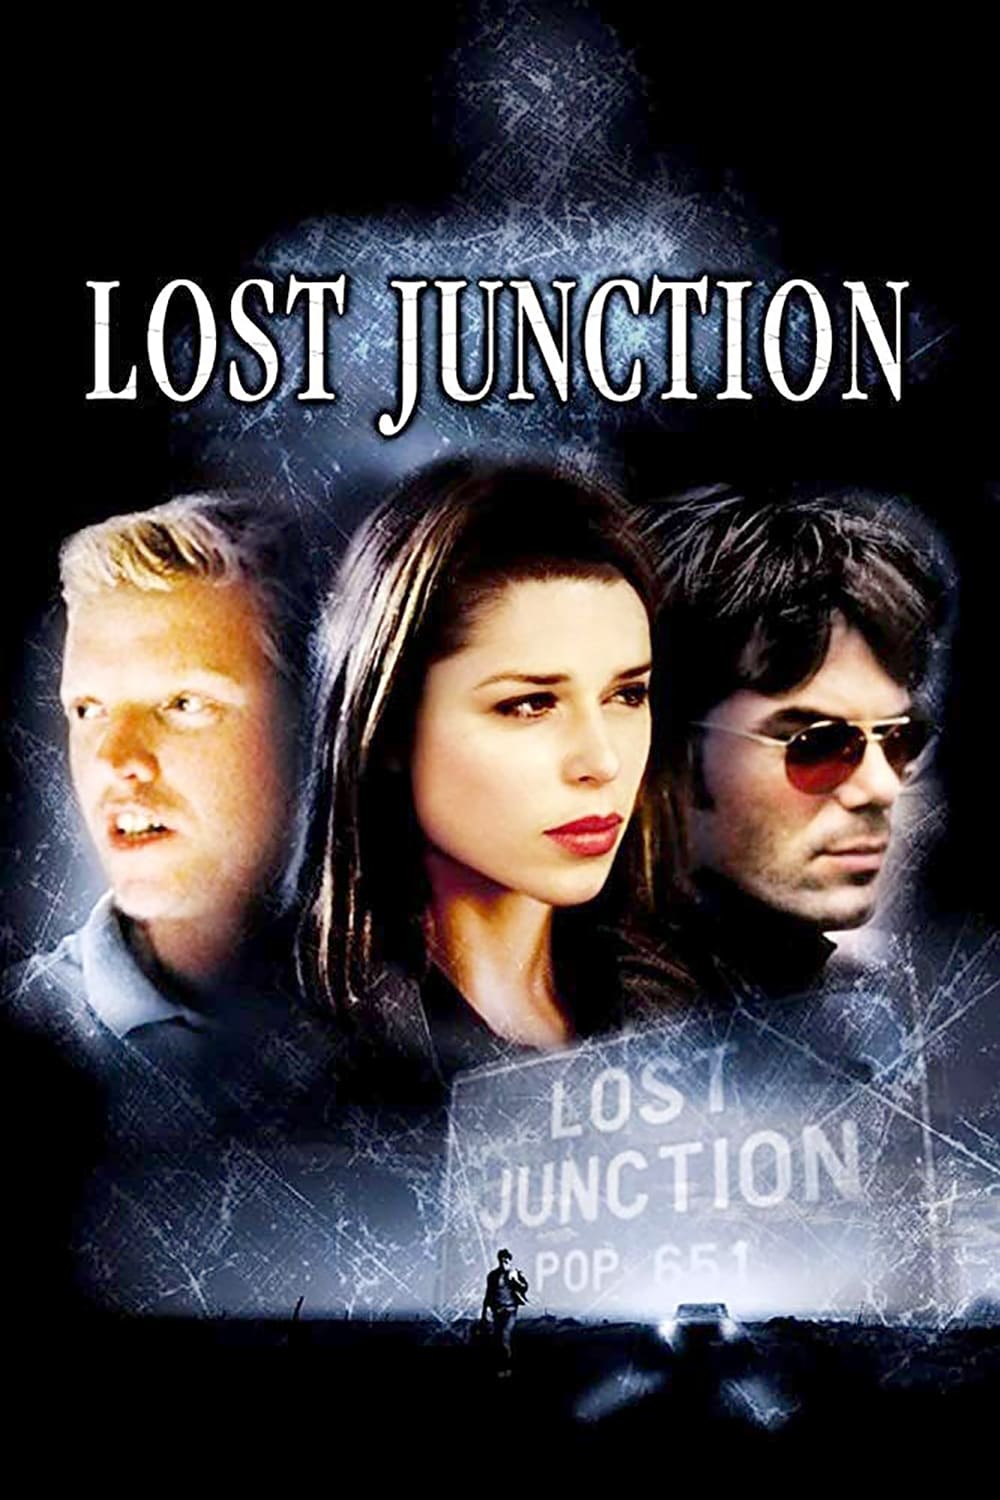 Lost Junction film